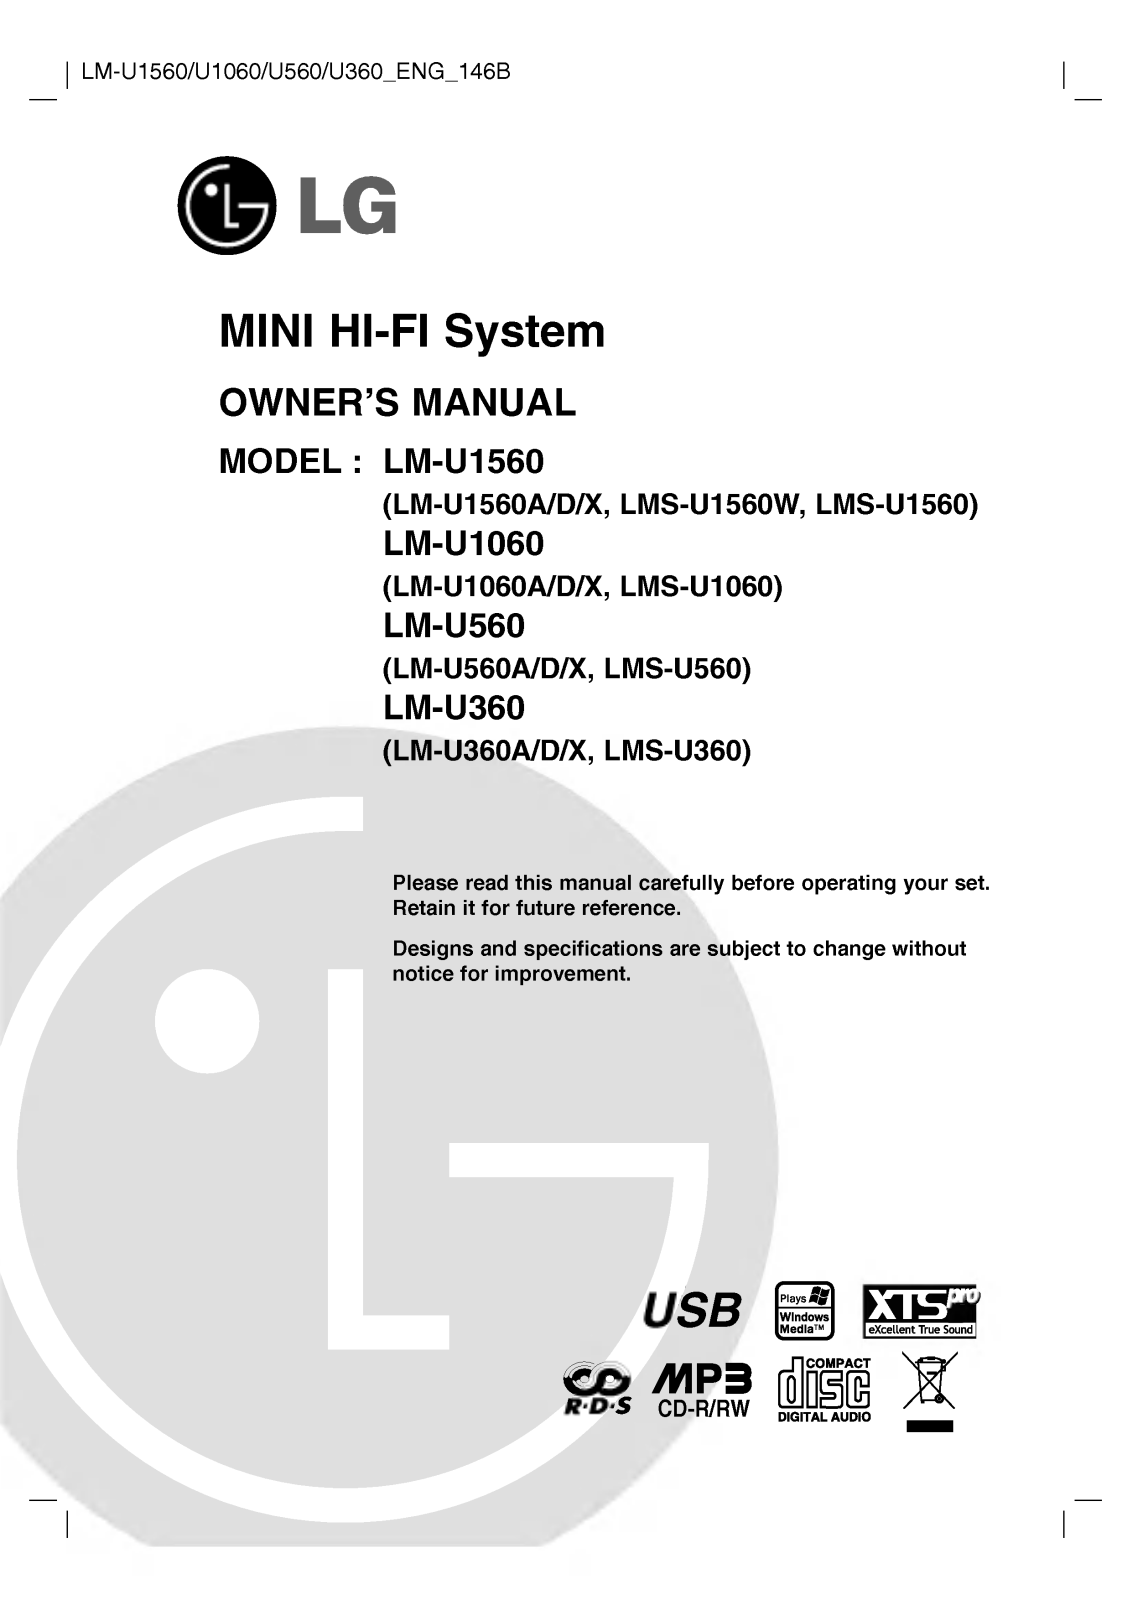 LG LM-U560D Owner’s Manual